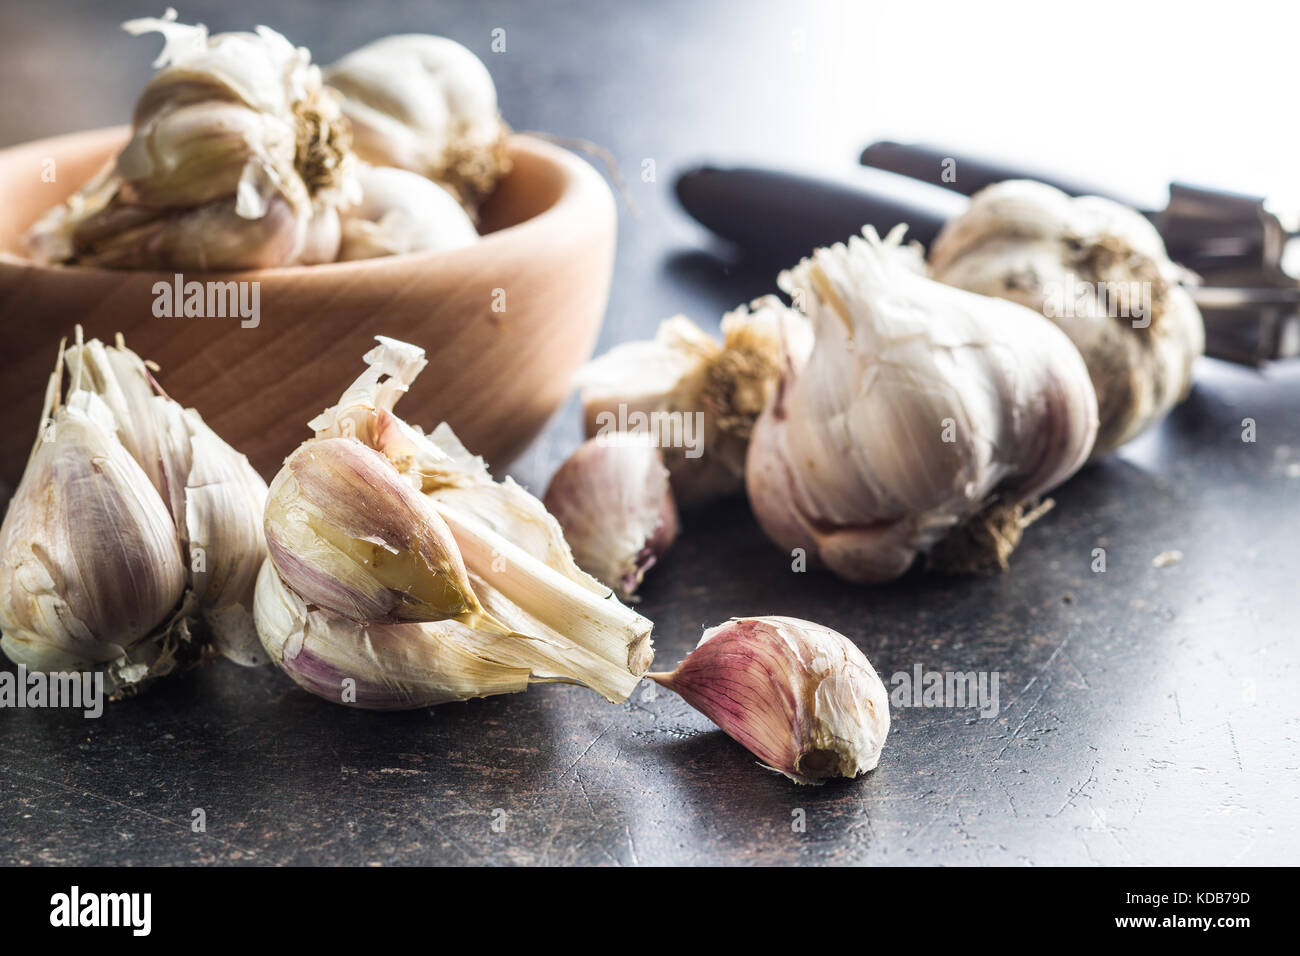 Fresh garlic and garlic presser on kitchen table. Stock Photo